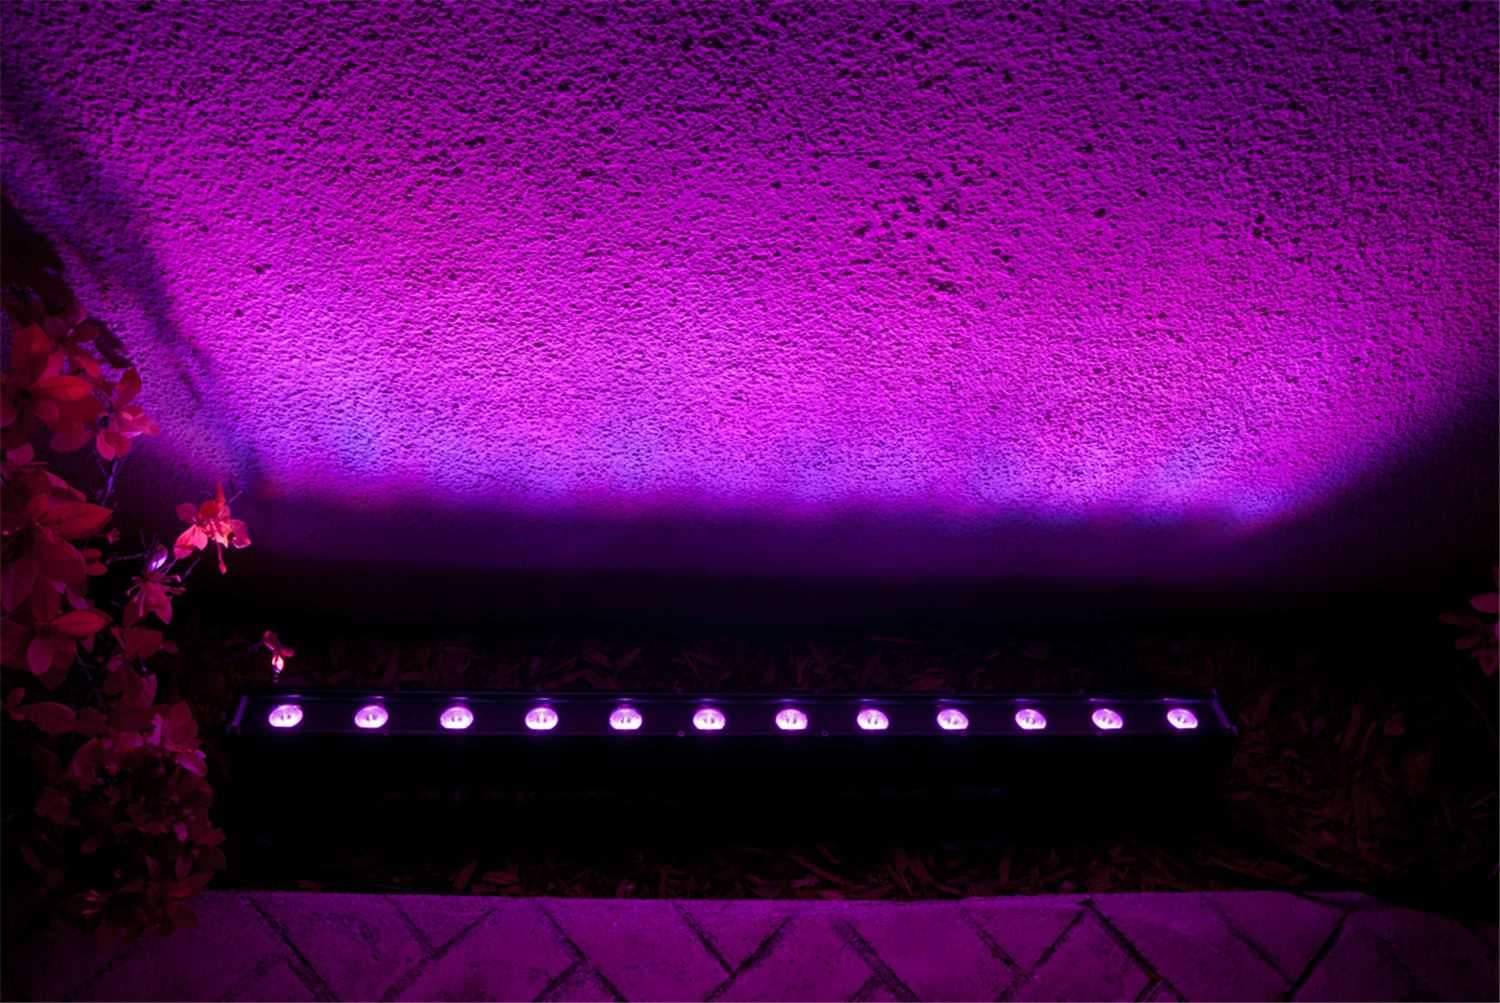 Chauvet COLORband PiX IP LED Light Strip - ProSound and Stage Lighting